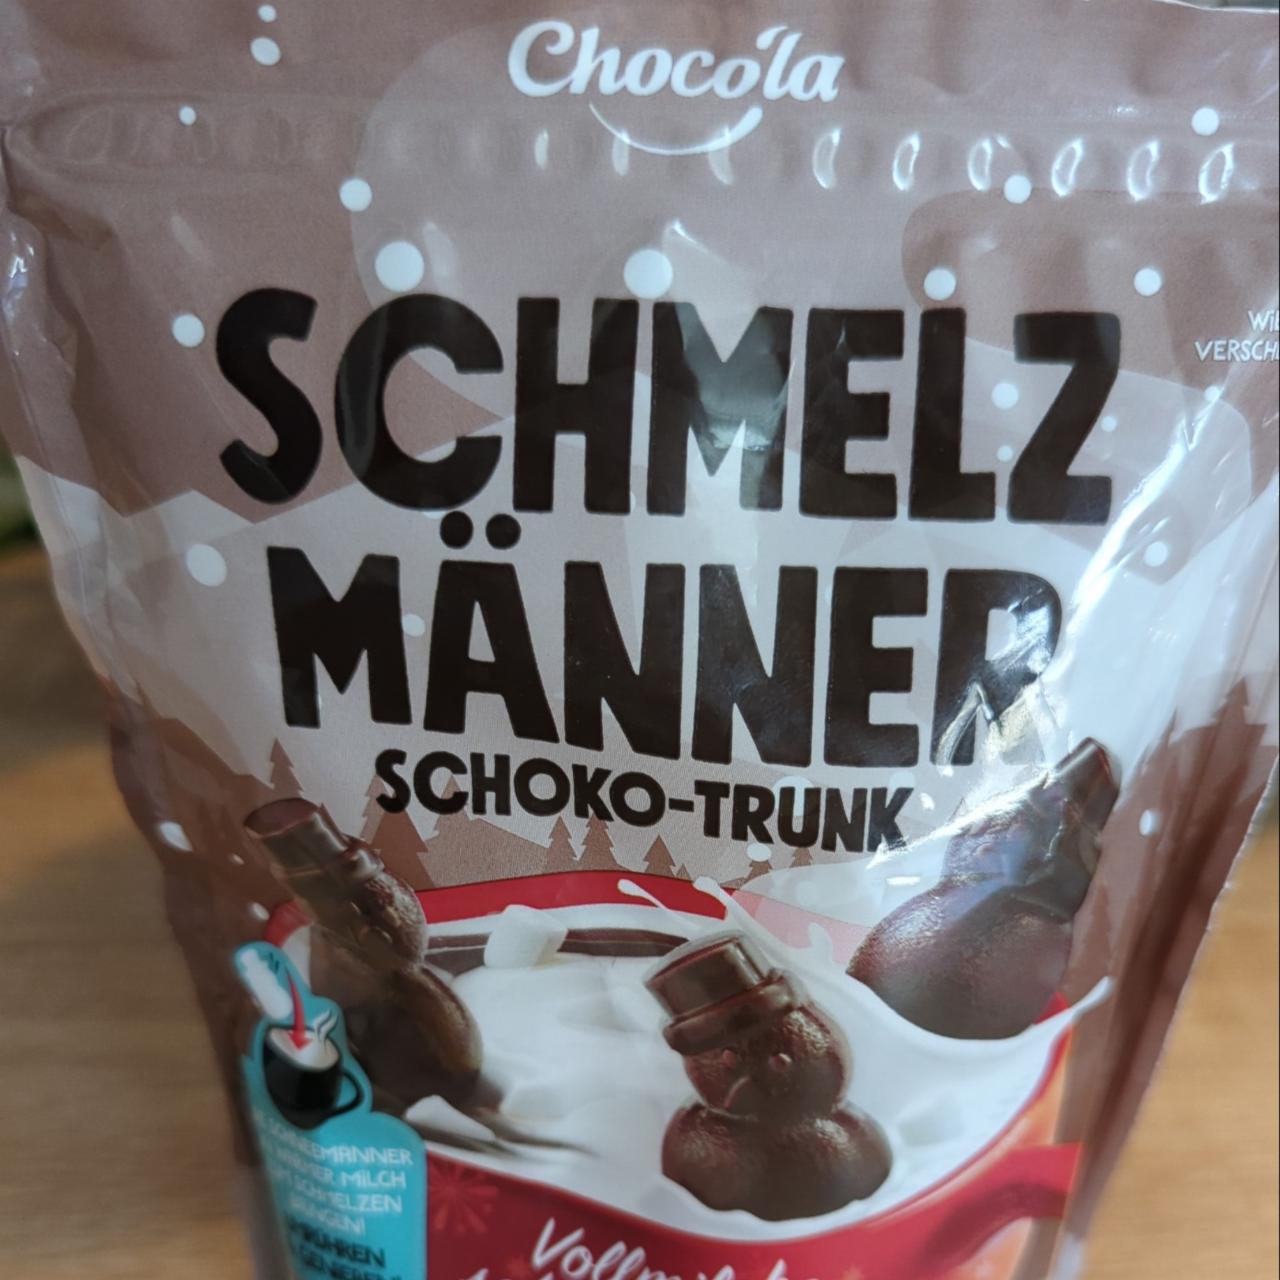 Фото - Schmelz Männer Schoko-Trunk Chocola